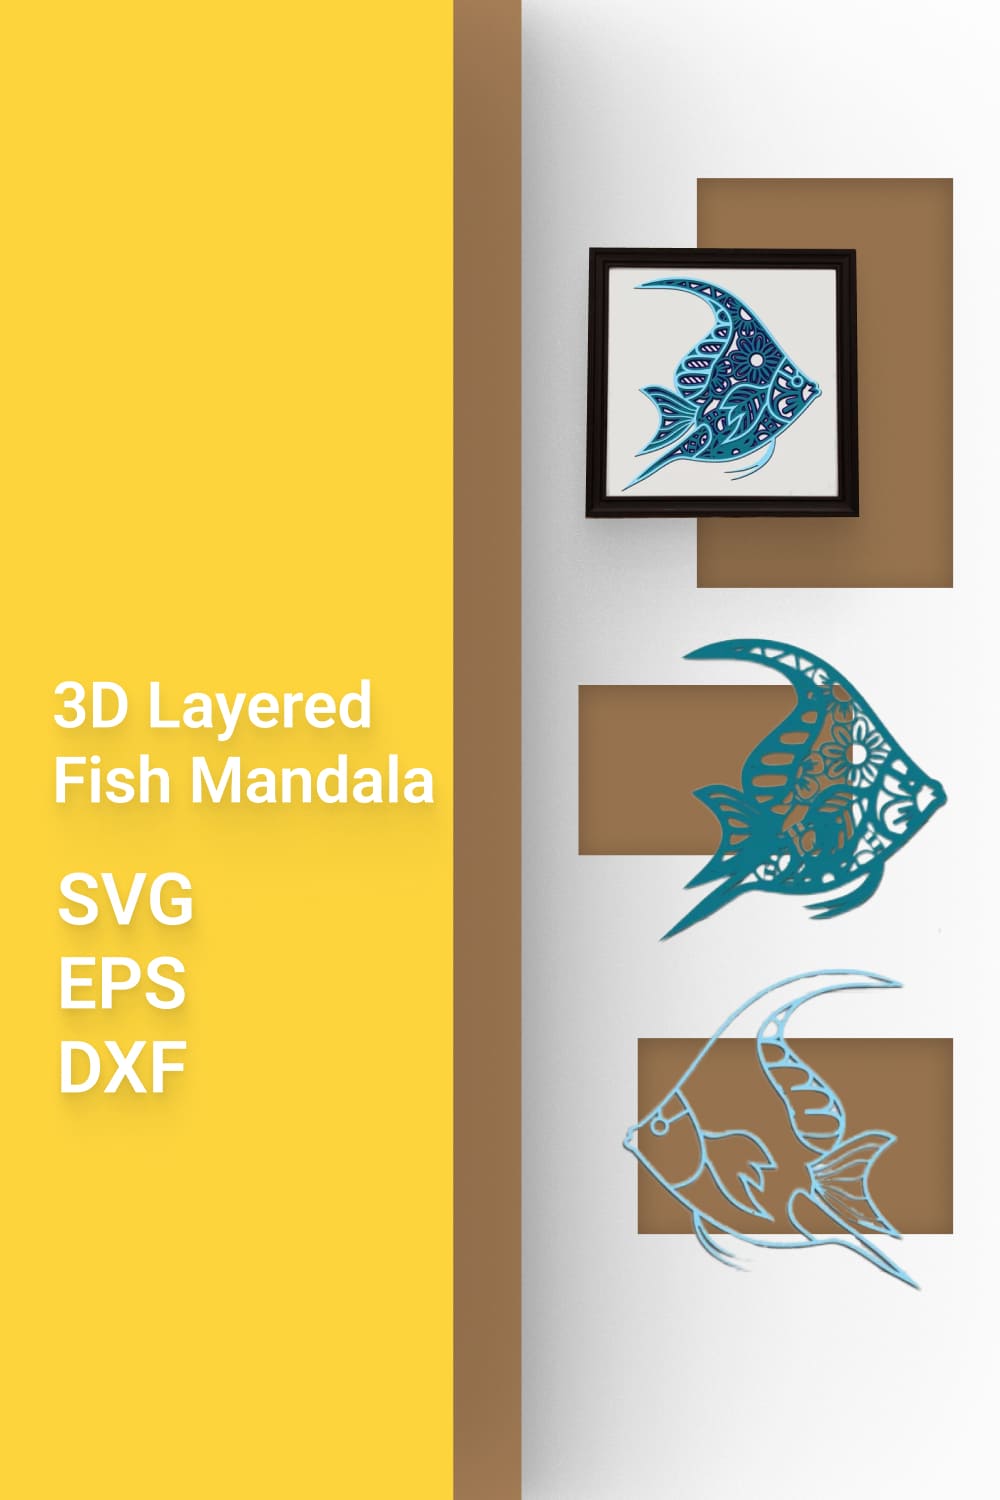 3D Layered Fish Mandala SVG 3 Layers.